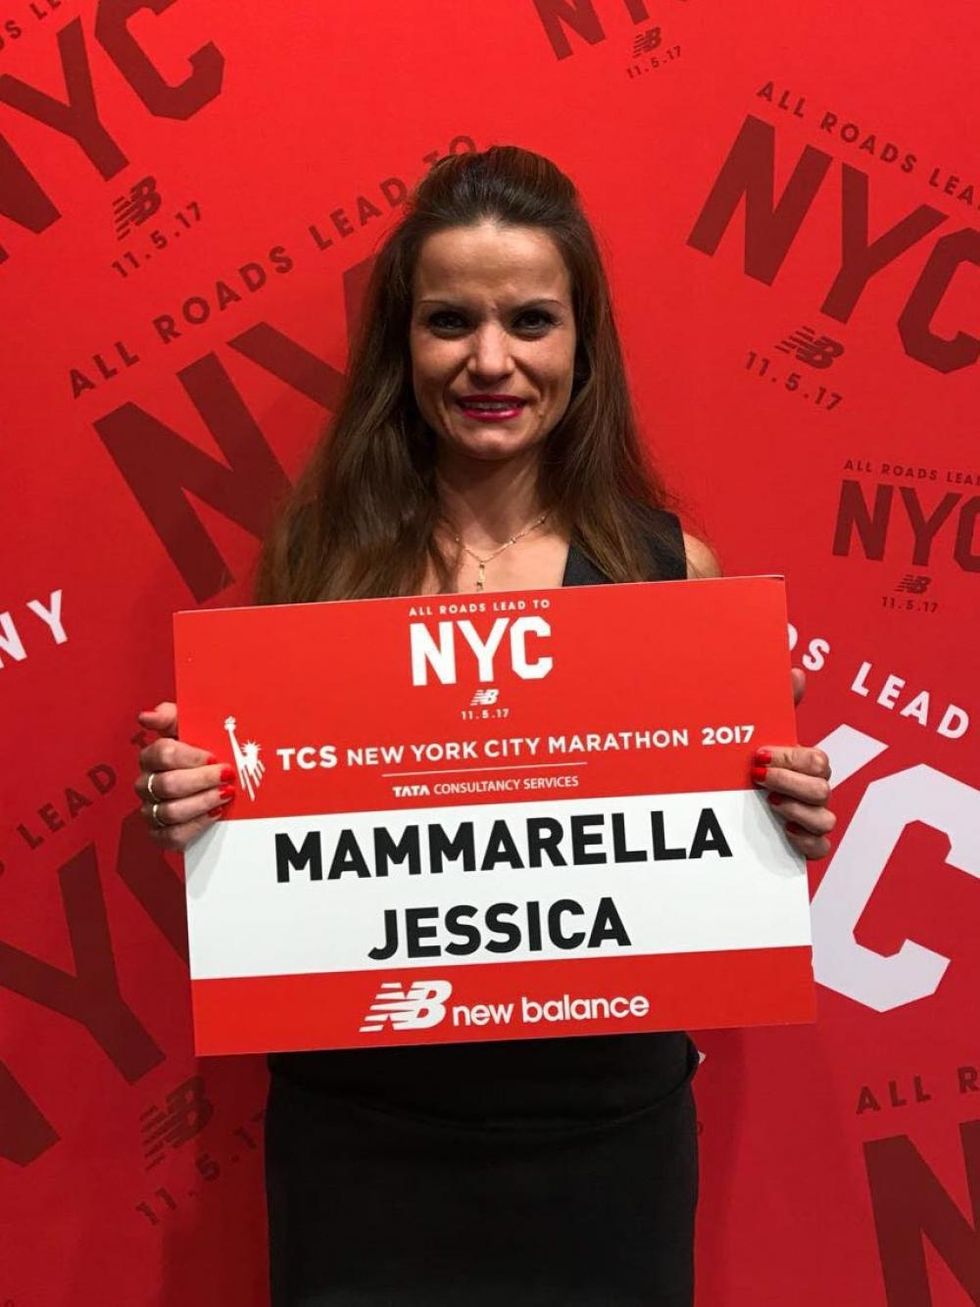 Jessica Mammarella